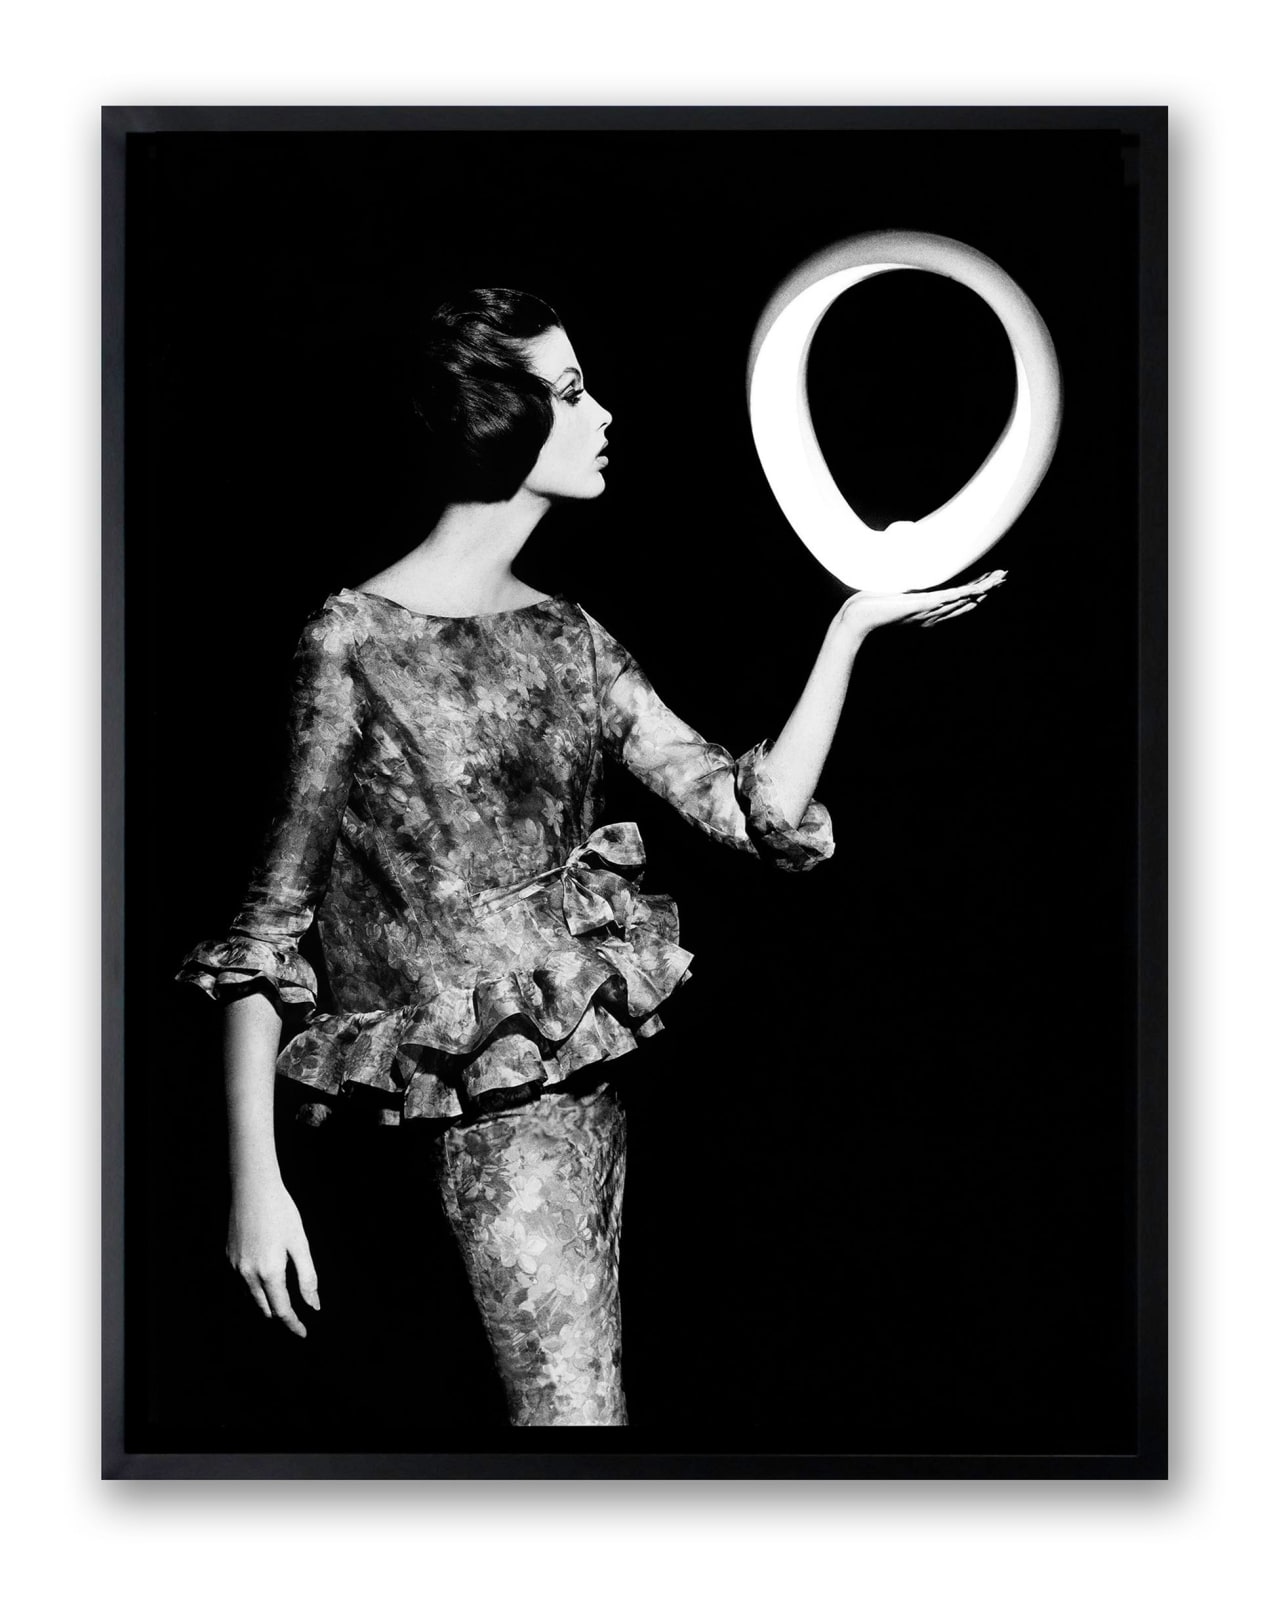 William Klein, Dorothy + Big White Circle, Paris, 1962